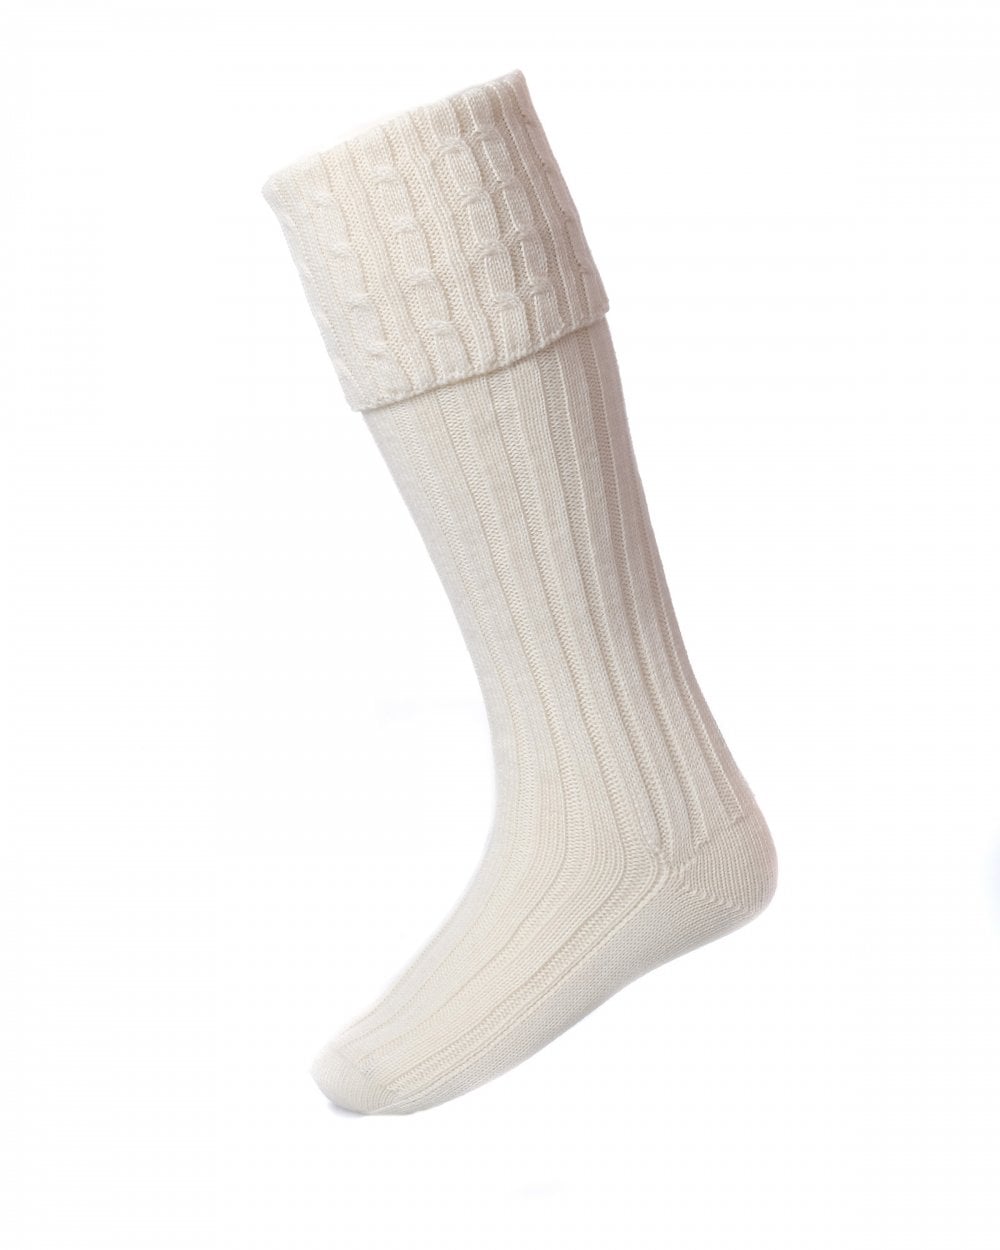 Harris Merino Wool Kilt Socks by House of Cheviot - Ecru